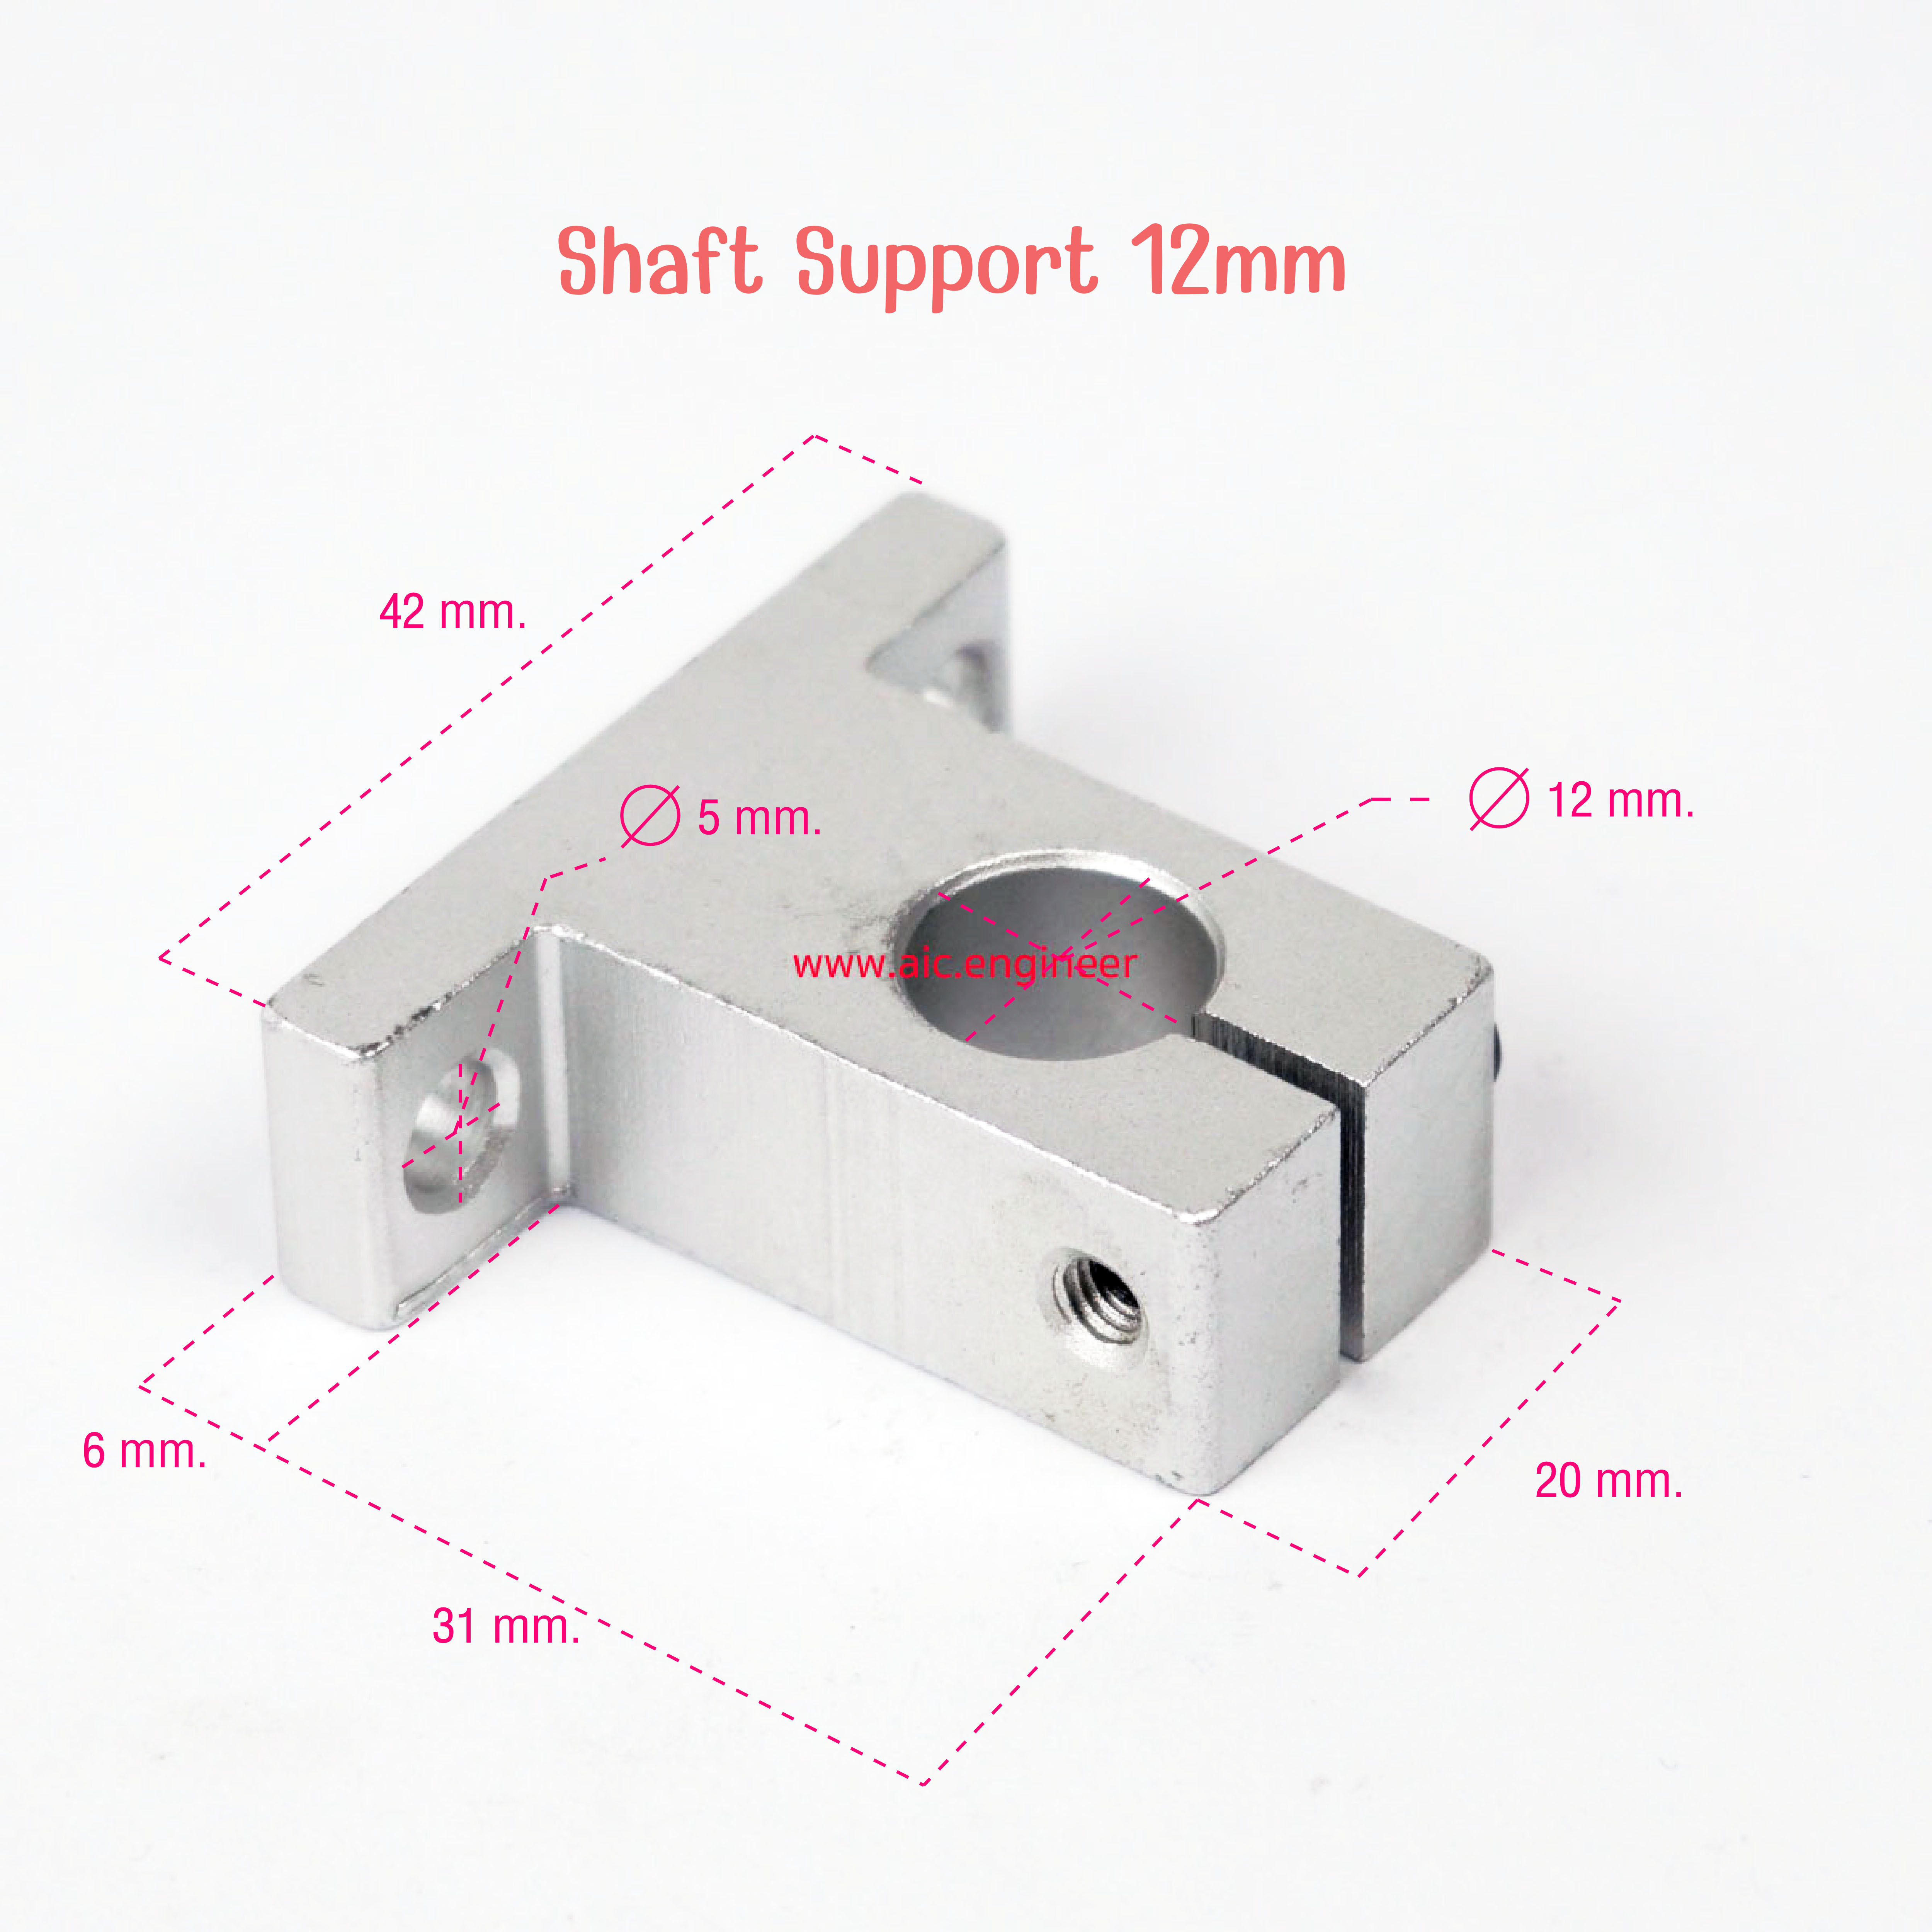 Shaft Support 12mm